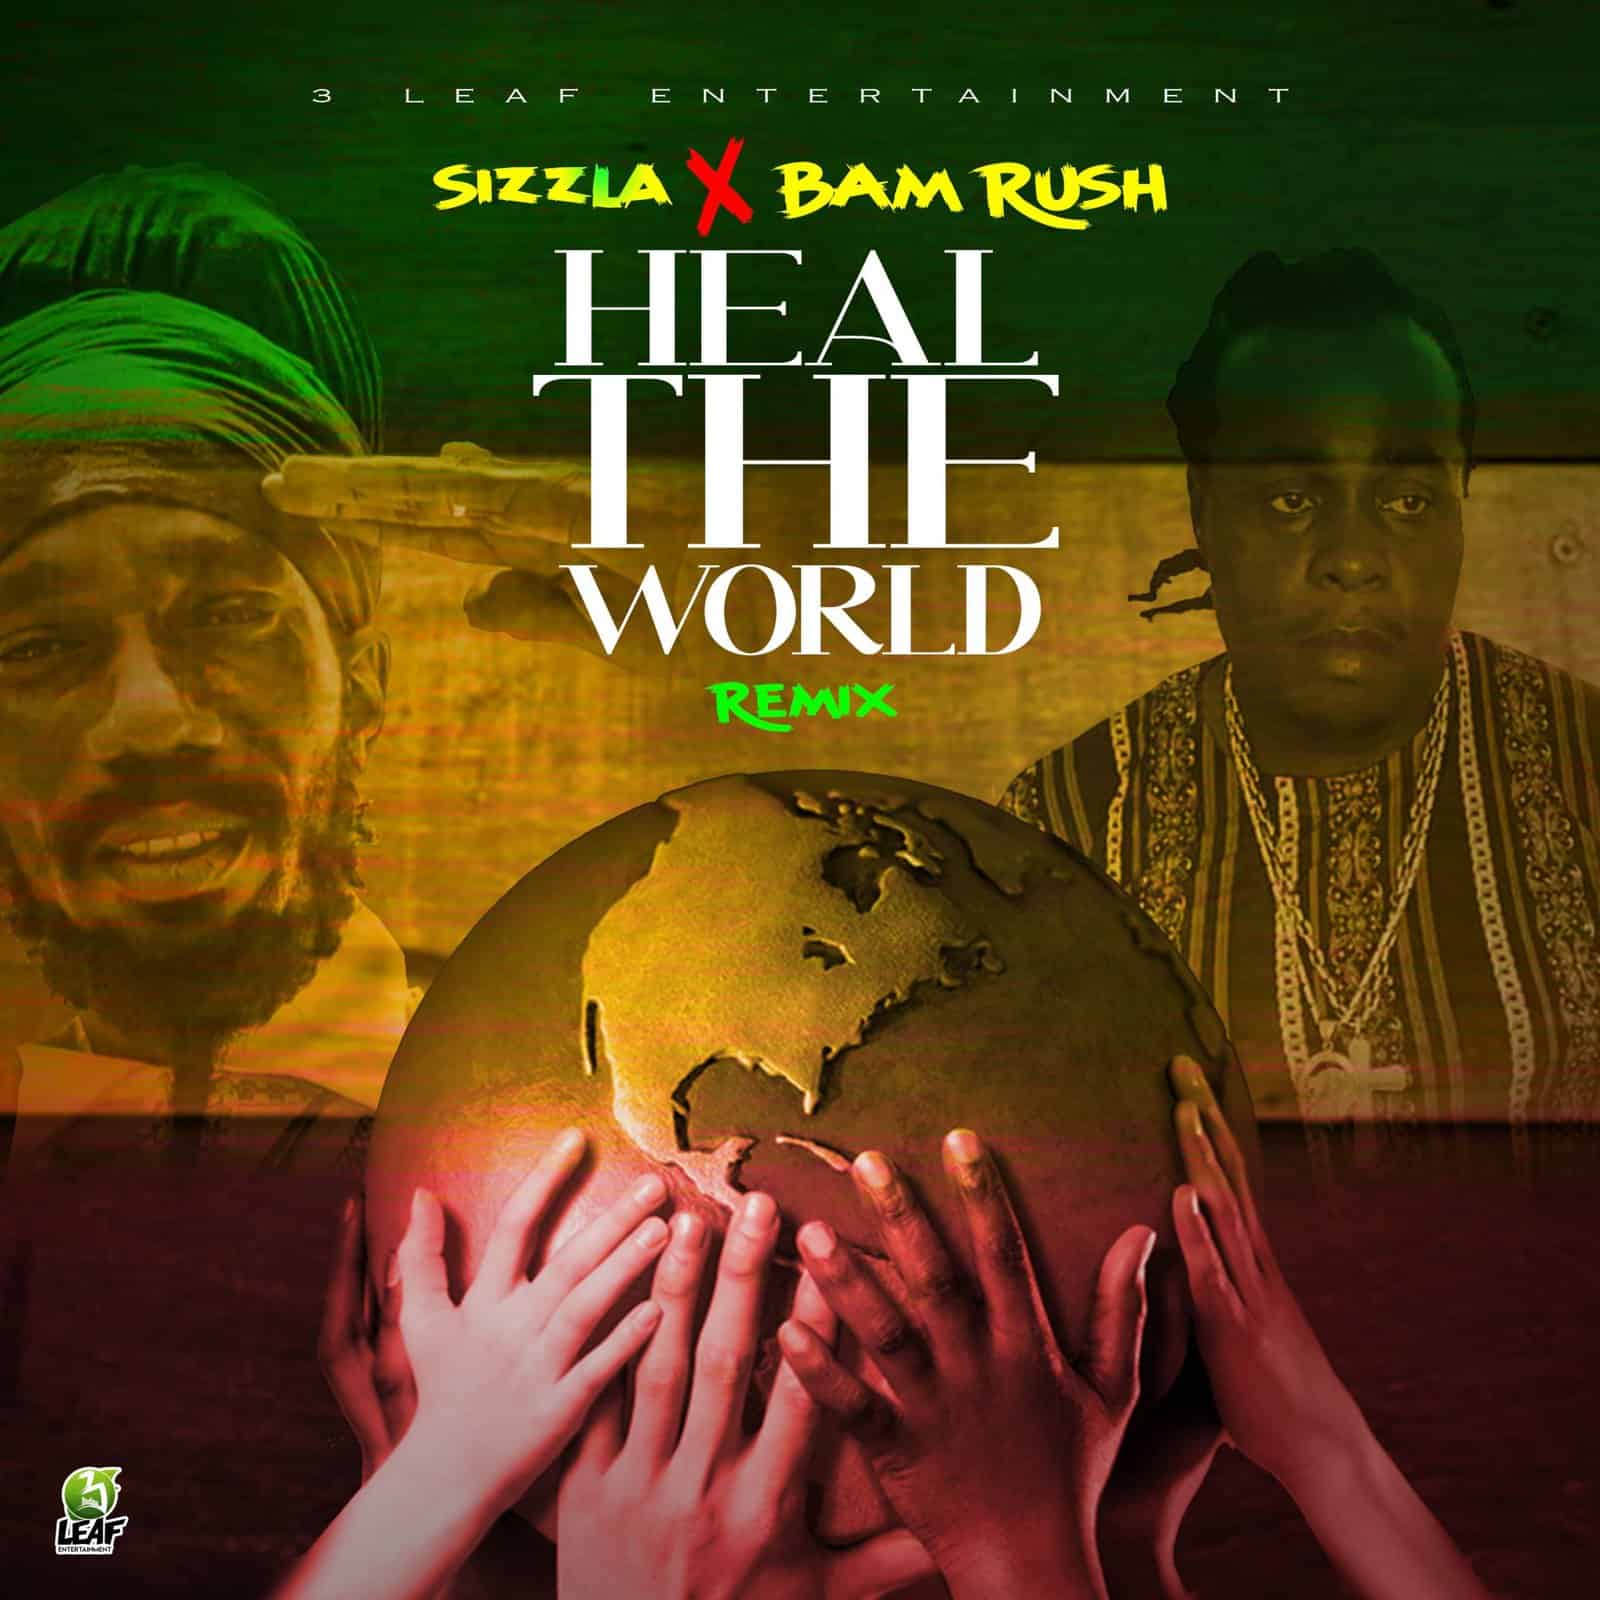 Sizzla X Bam Rush - Heal the World Remix